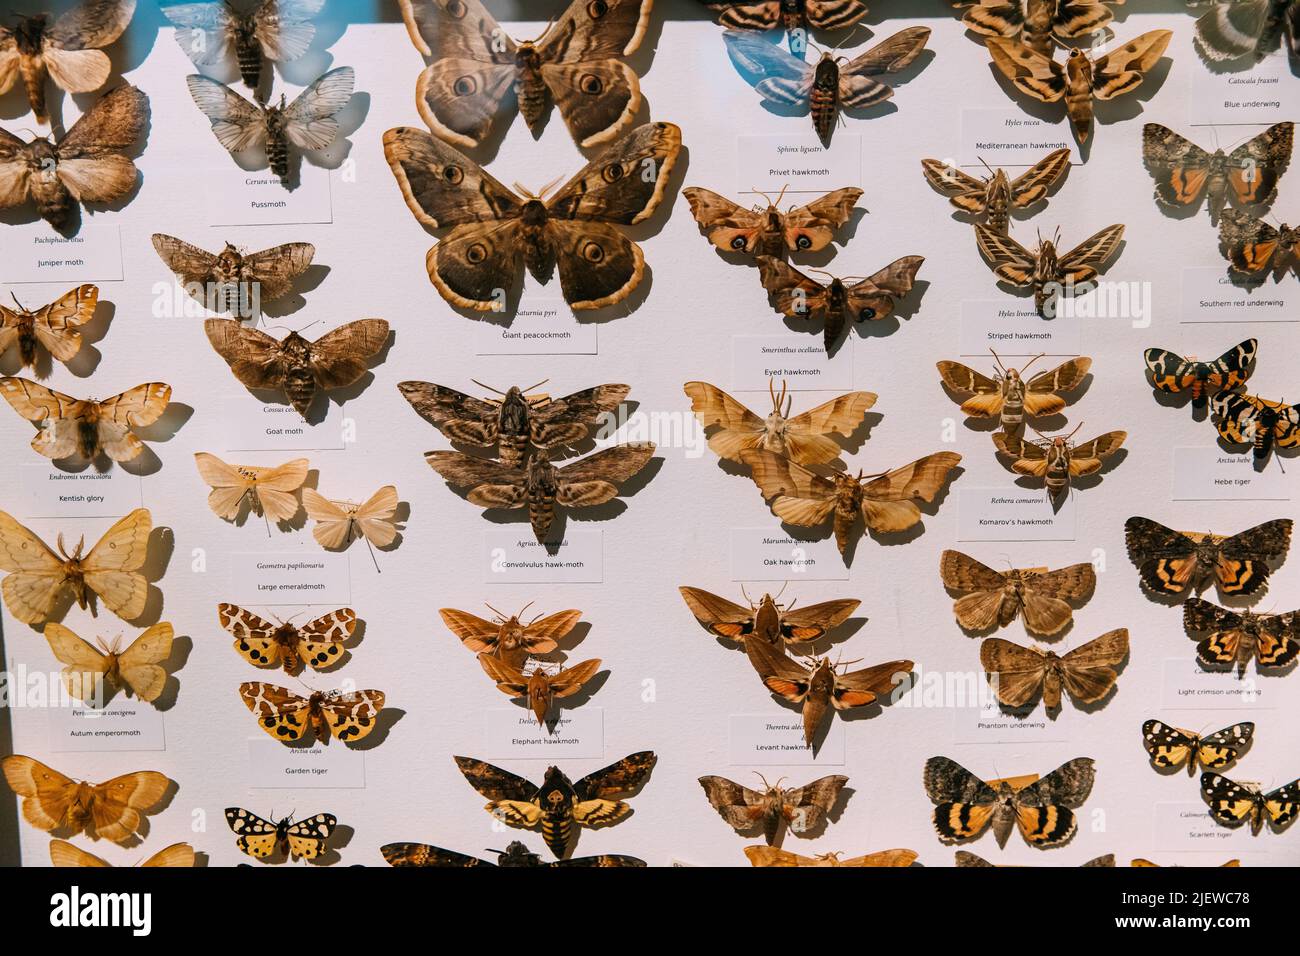 Collection entomologique de papillons. Collage d'insectes de Lepidoptera pour entomologistes. Ensemble de divers papillons. Papillons. Banque D'Images